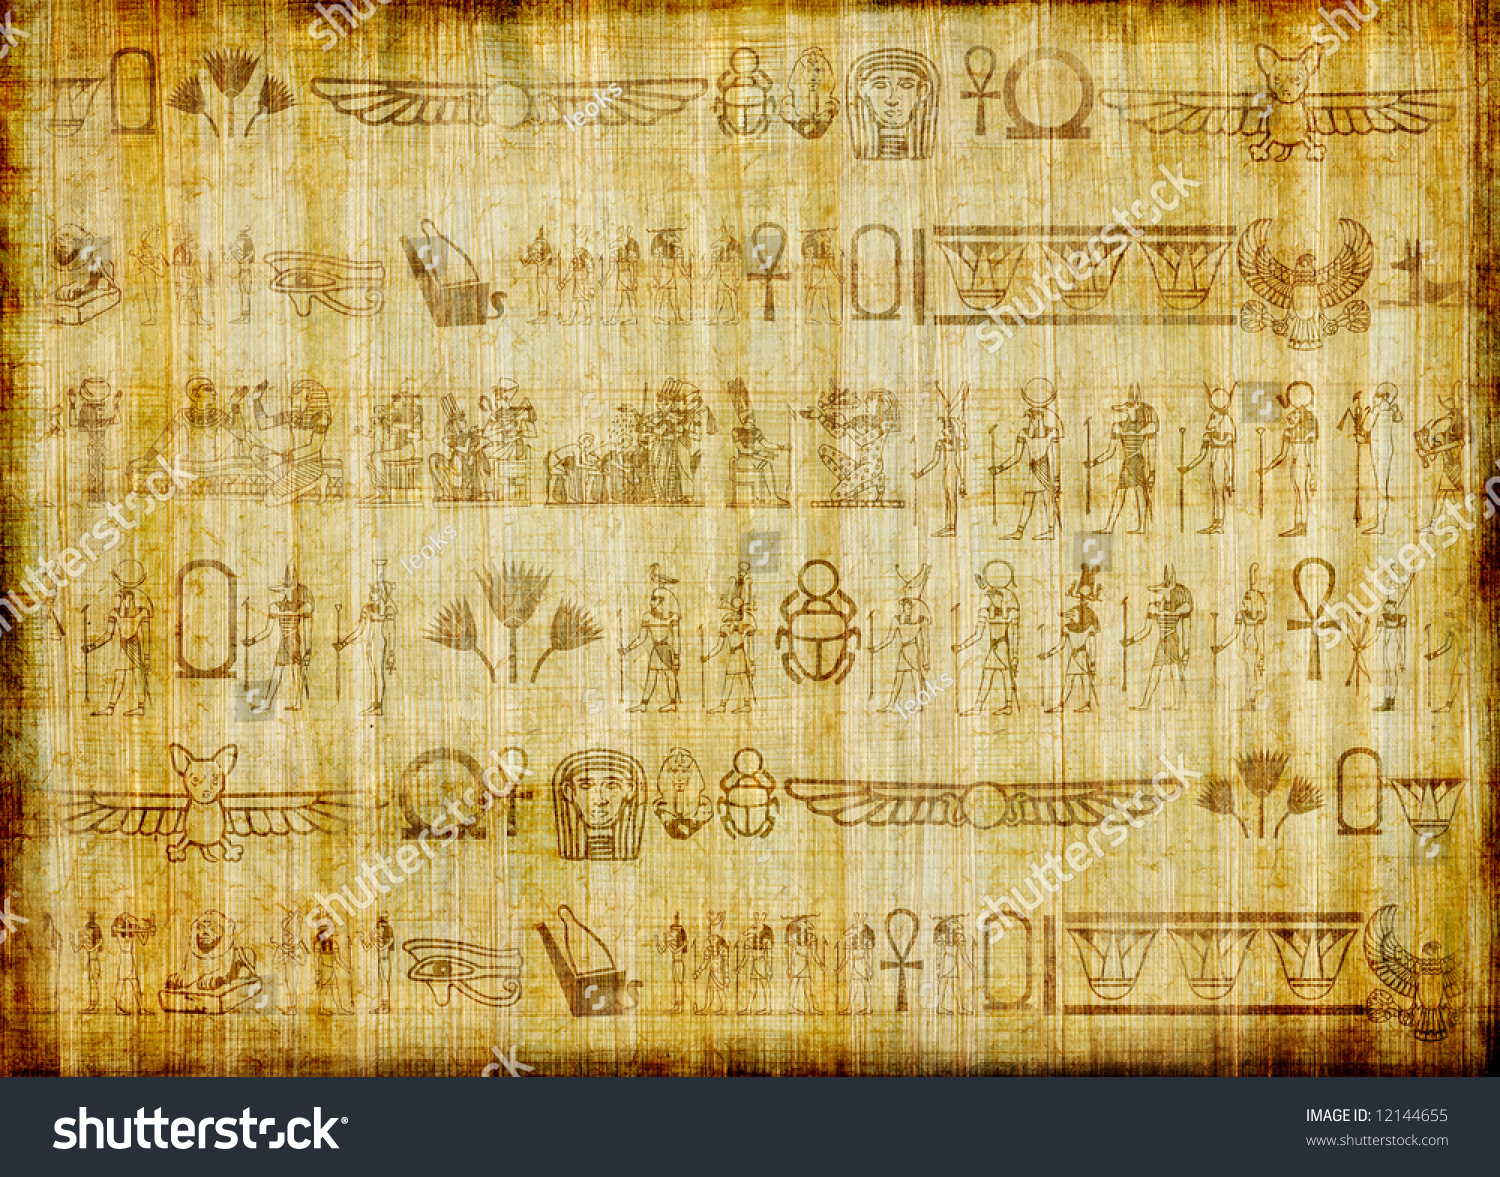 Египетские иероглифы на папирусе фото